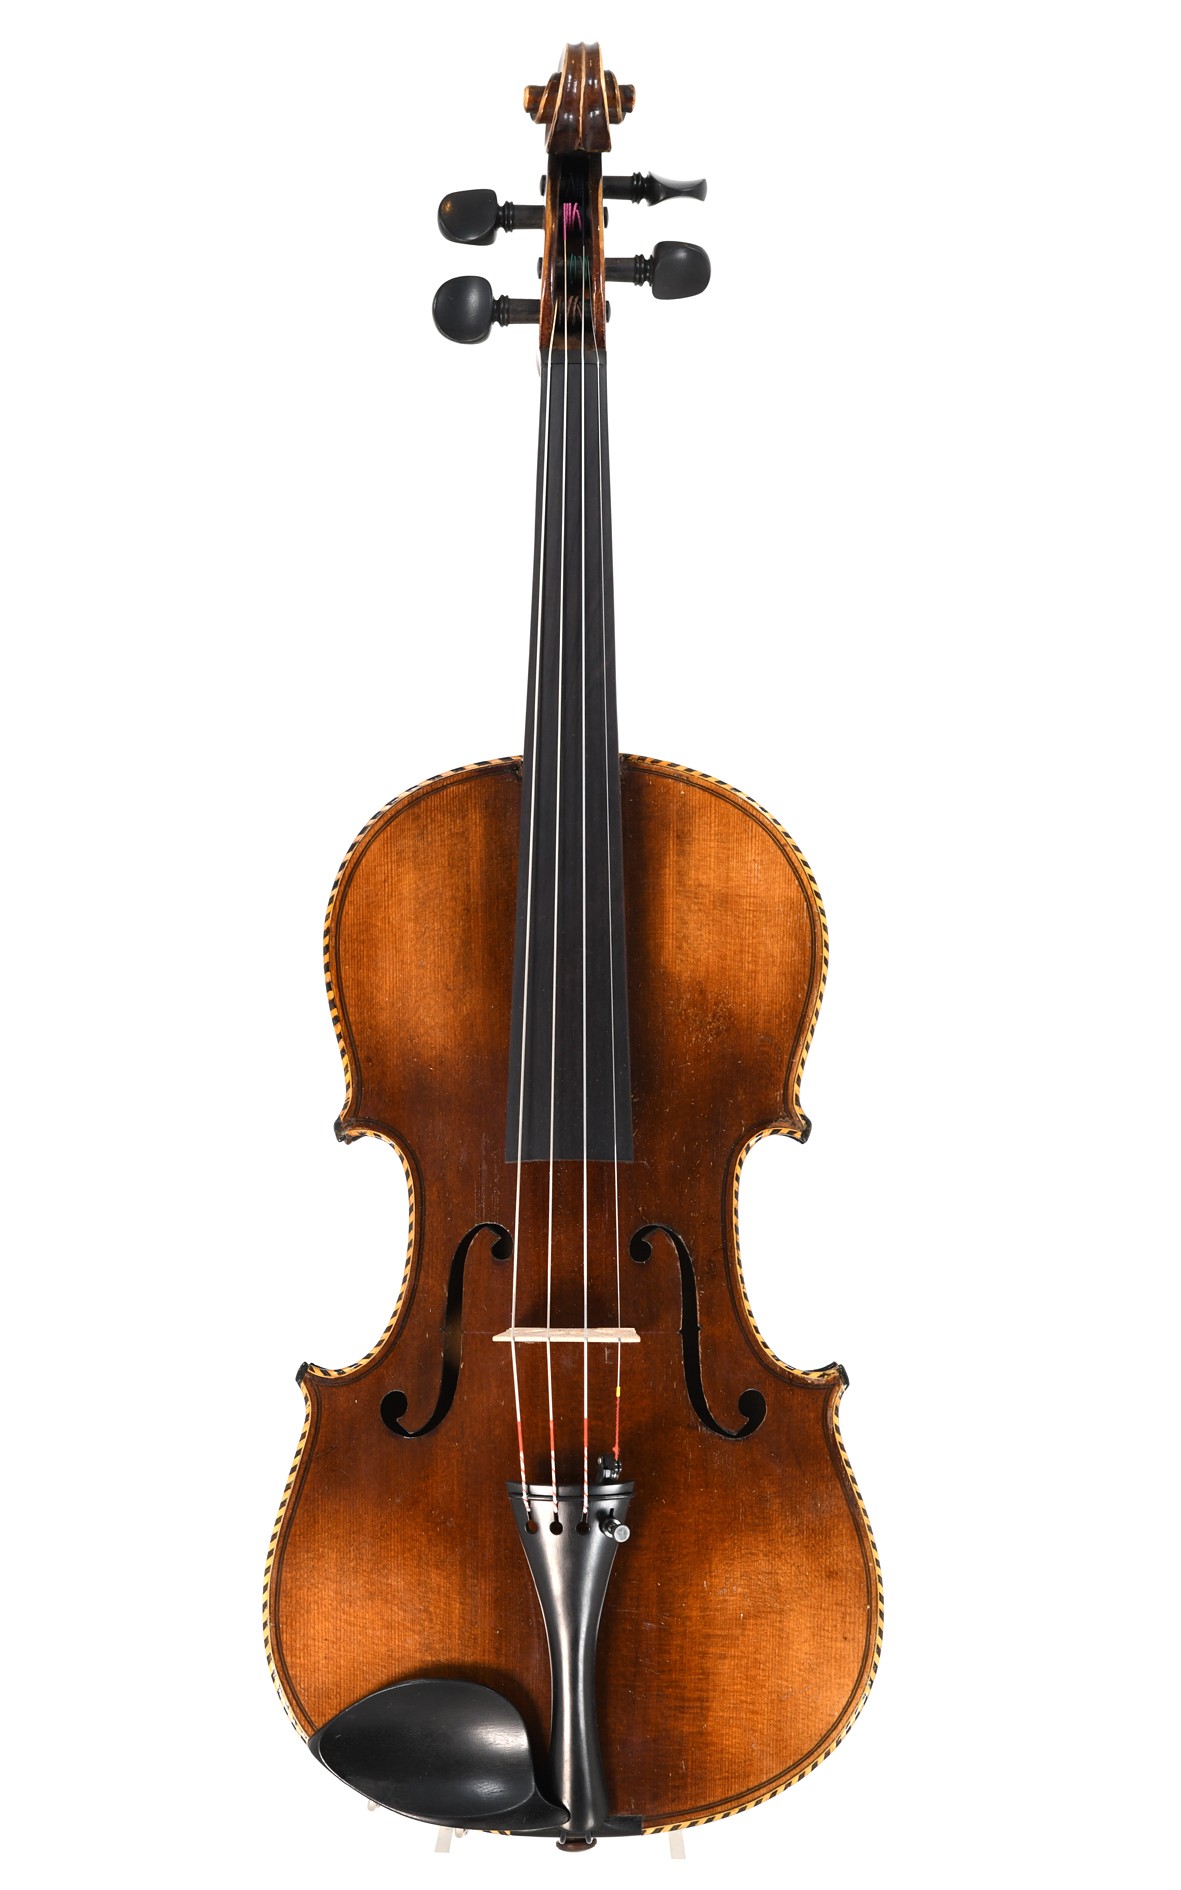 Antique Saxon violin with ornate edges